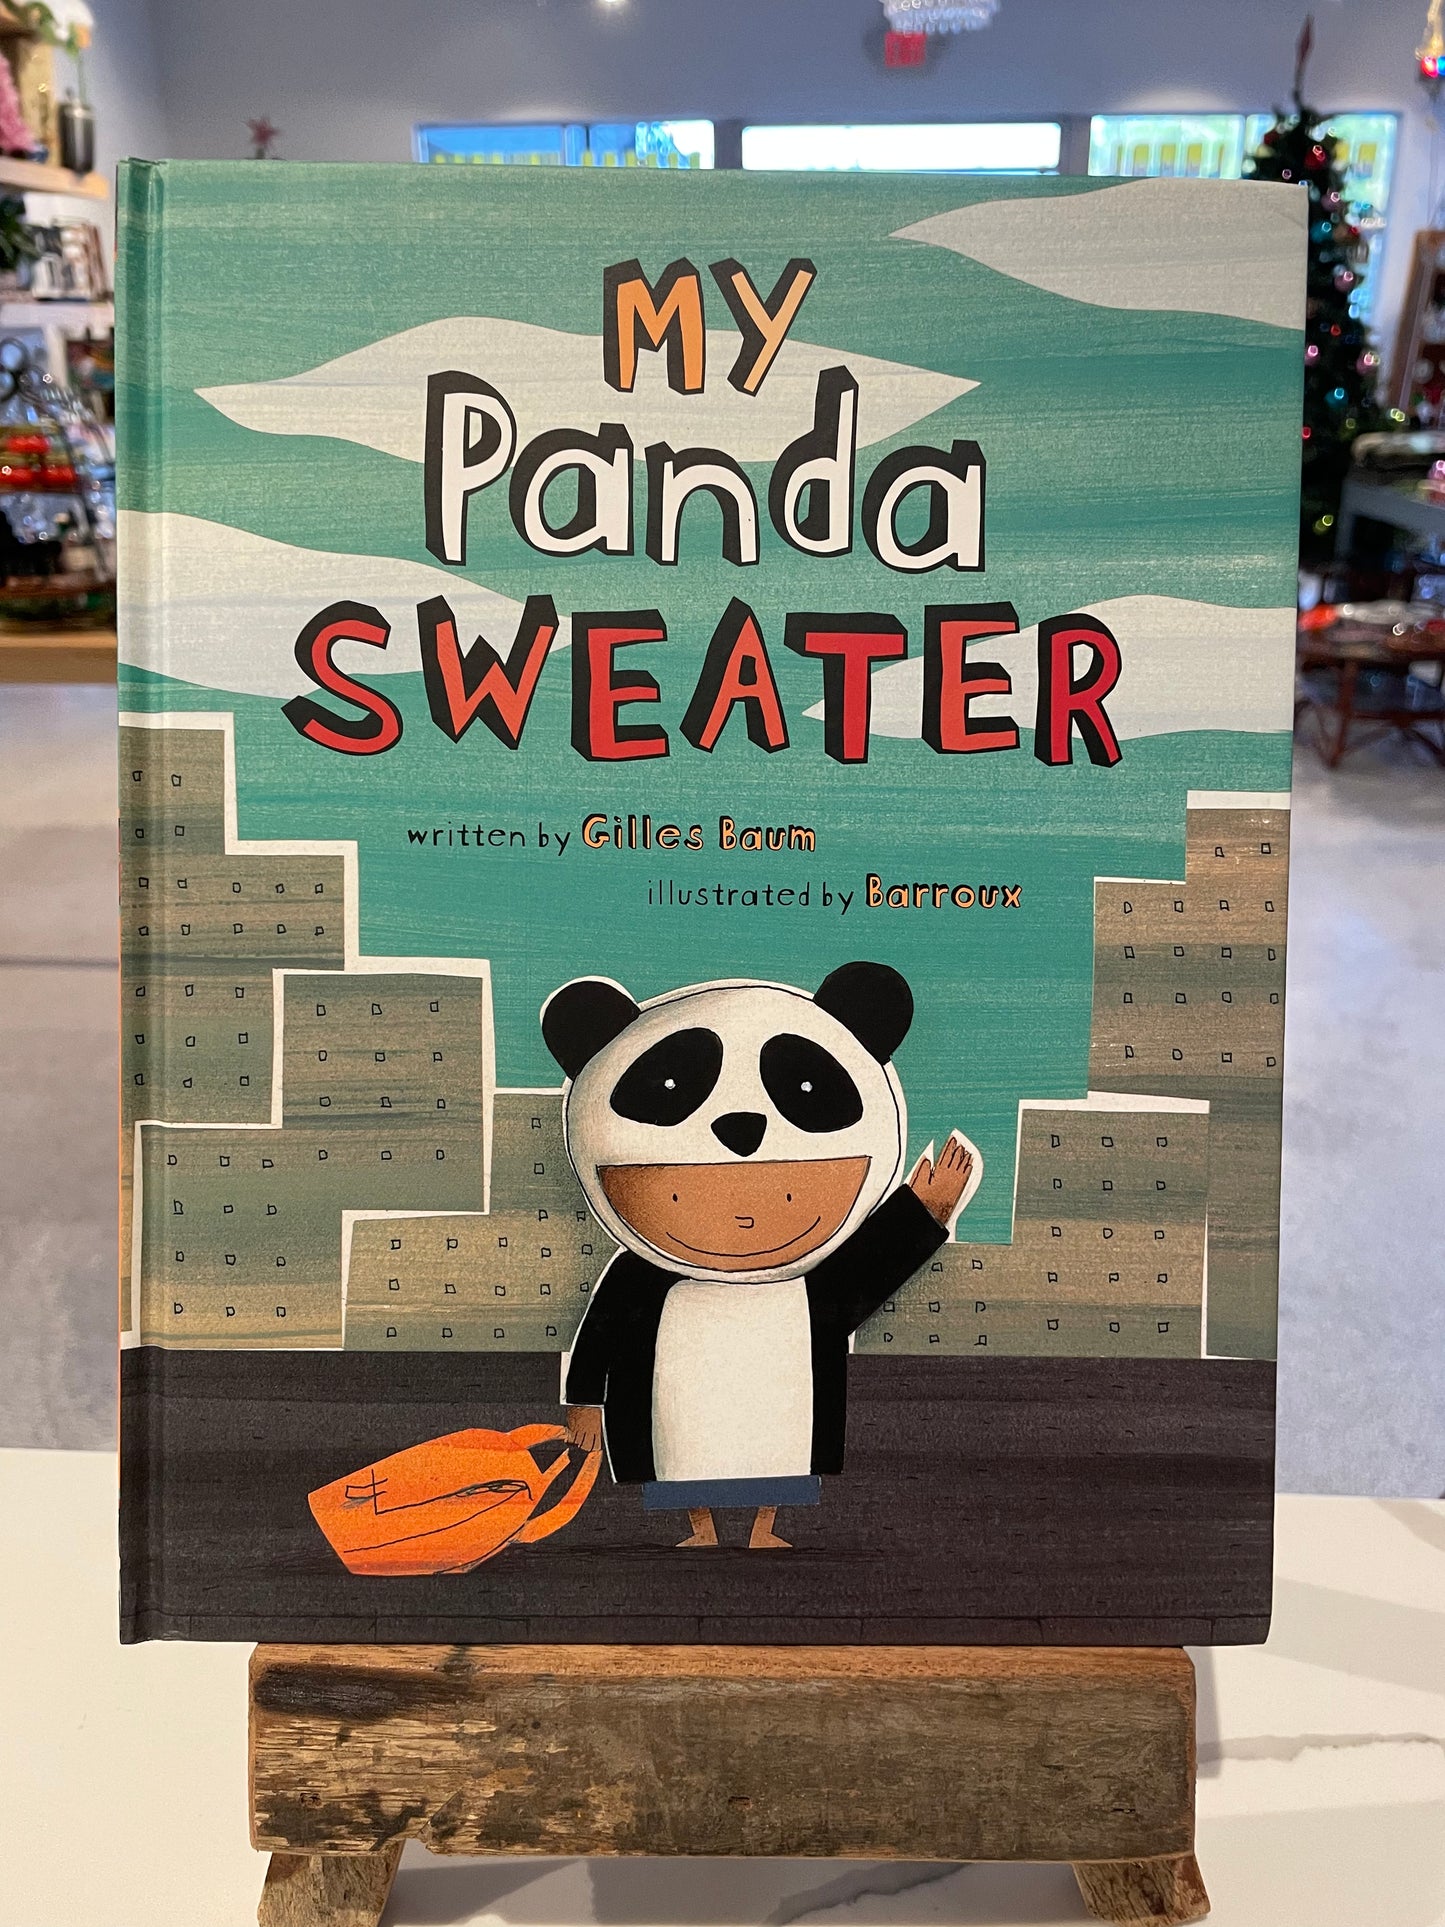 My Panda Sweater